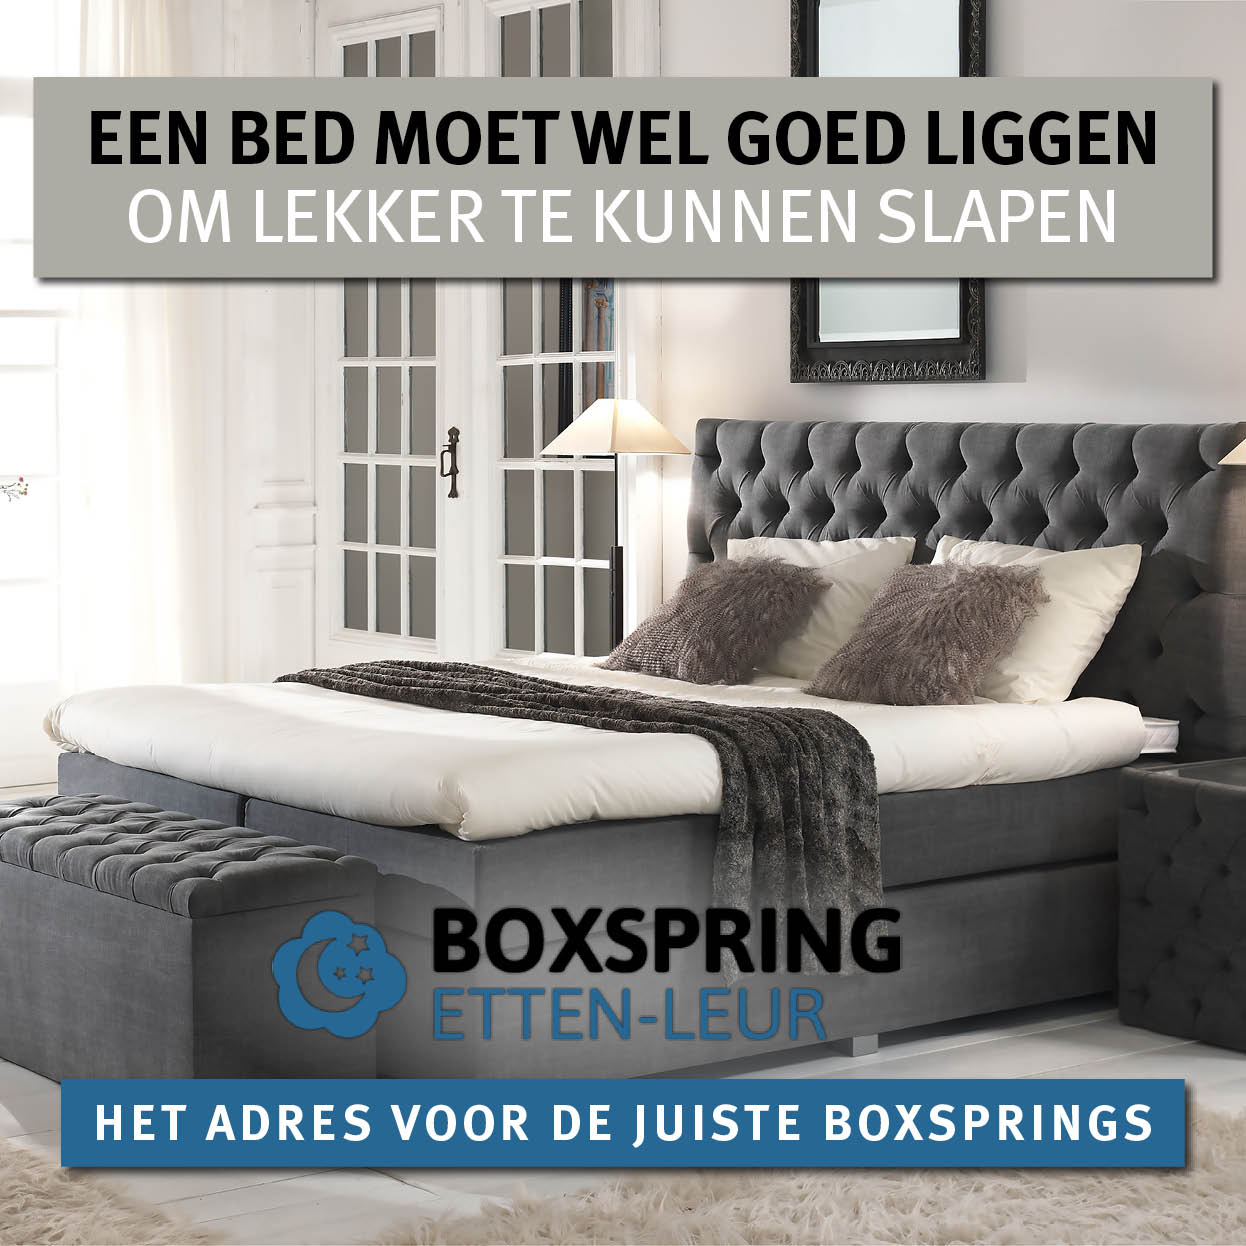 08074 - Boxspring Etten-Leur